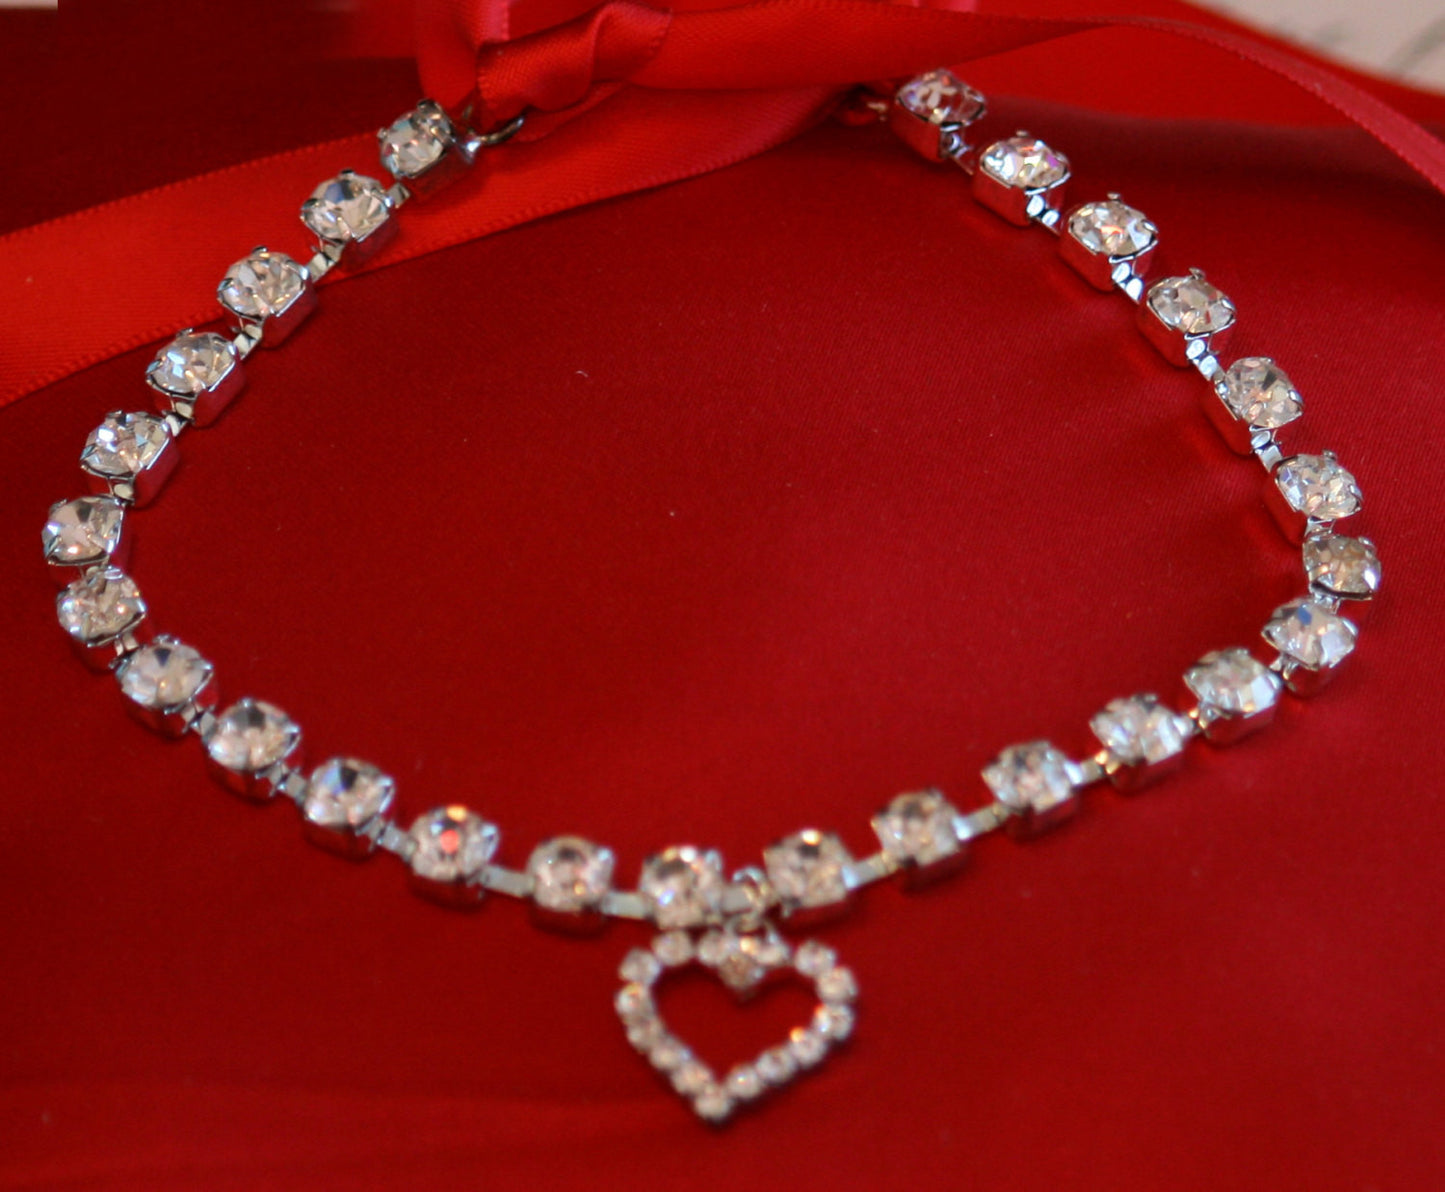 Dog jewelry- Rhinestone Pet wedding accessories, Dog jewelry with charm, Heart Charm. Cat jewelry , Wedding dog collar